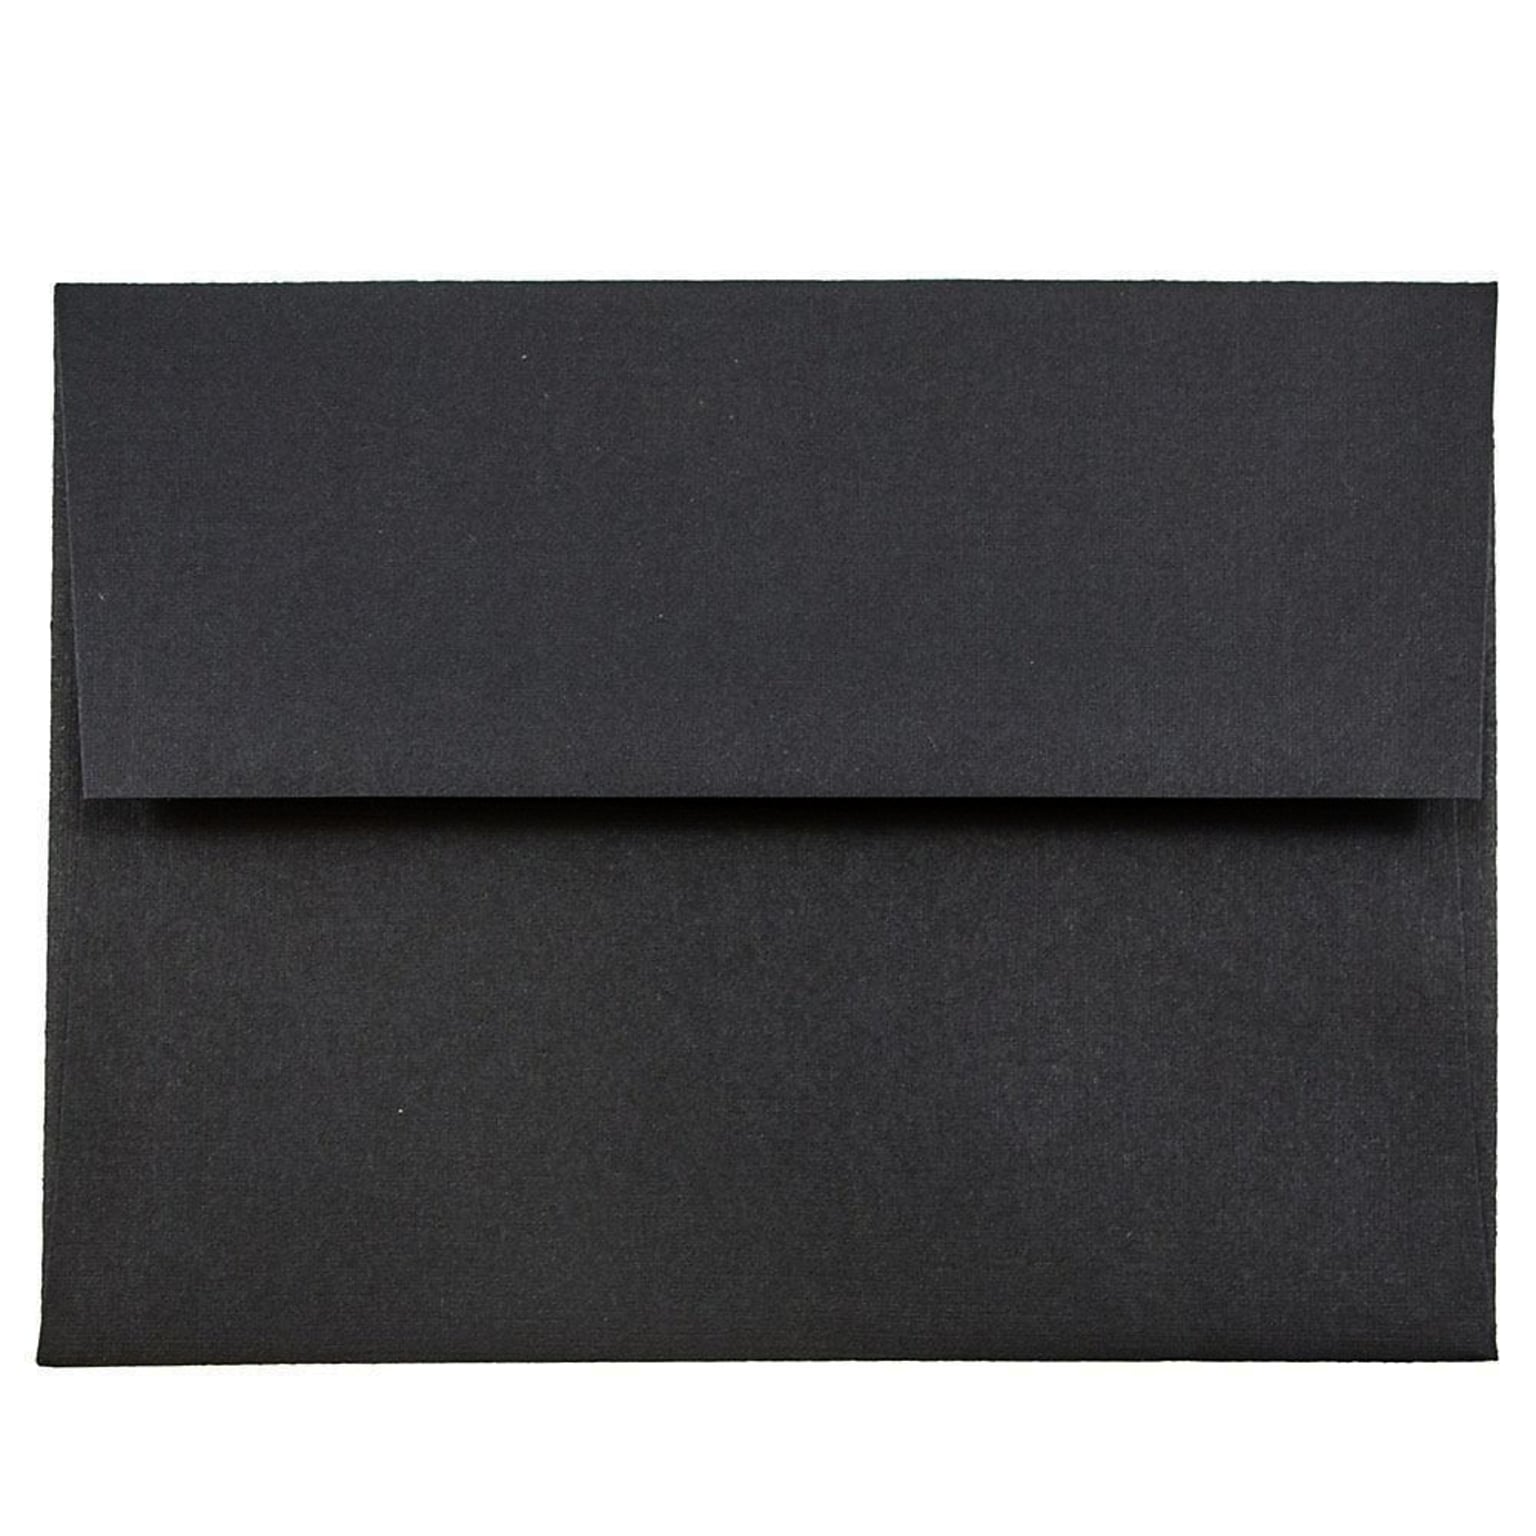 JAM Paper A2 Invitation Envelopes, 4.375 x 5.75, Black Linen, 25/Pack (64345)